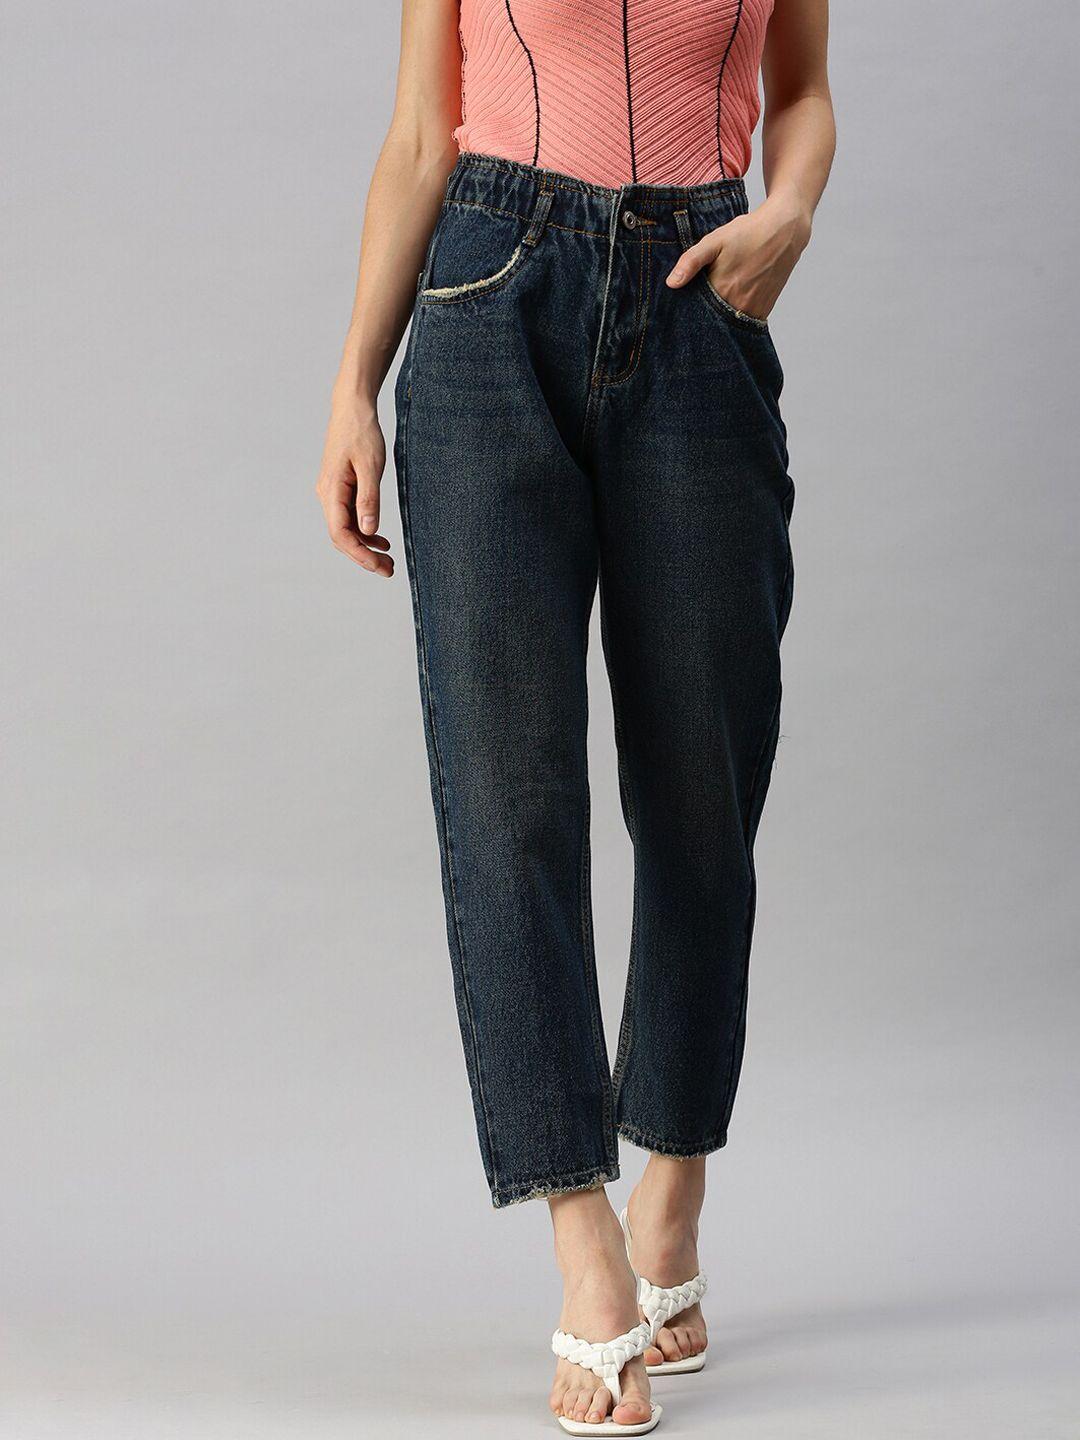 showoff-women-blue-jean-high-rise-jeans